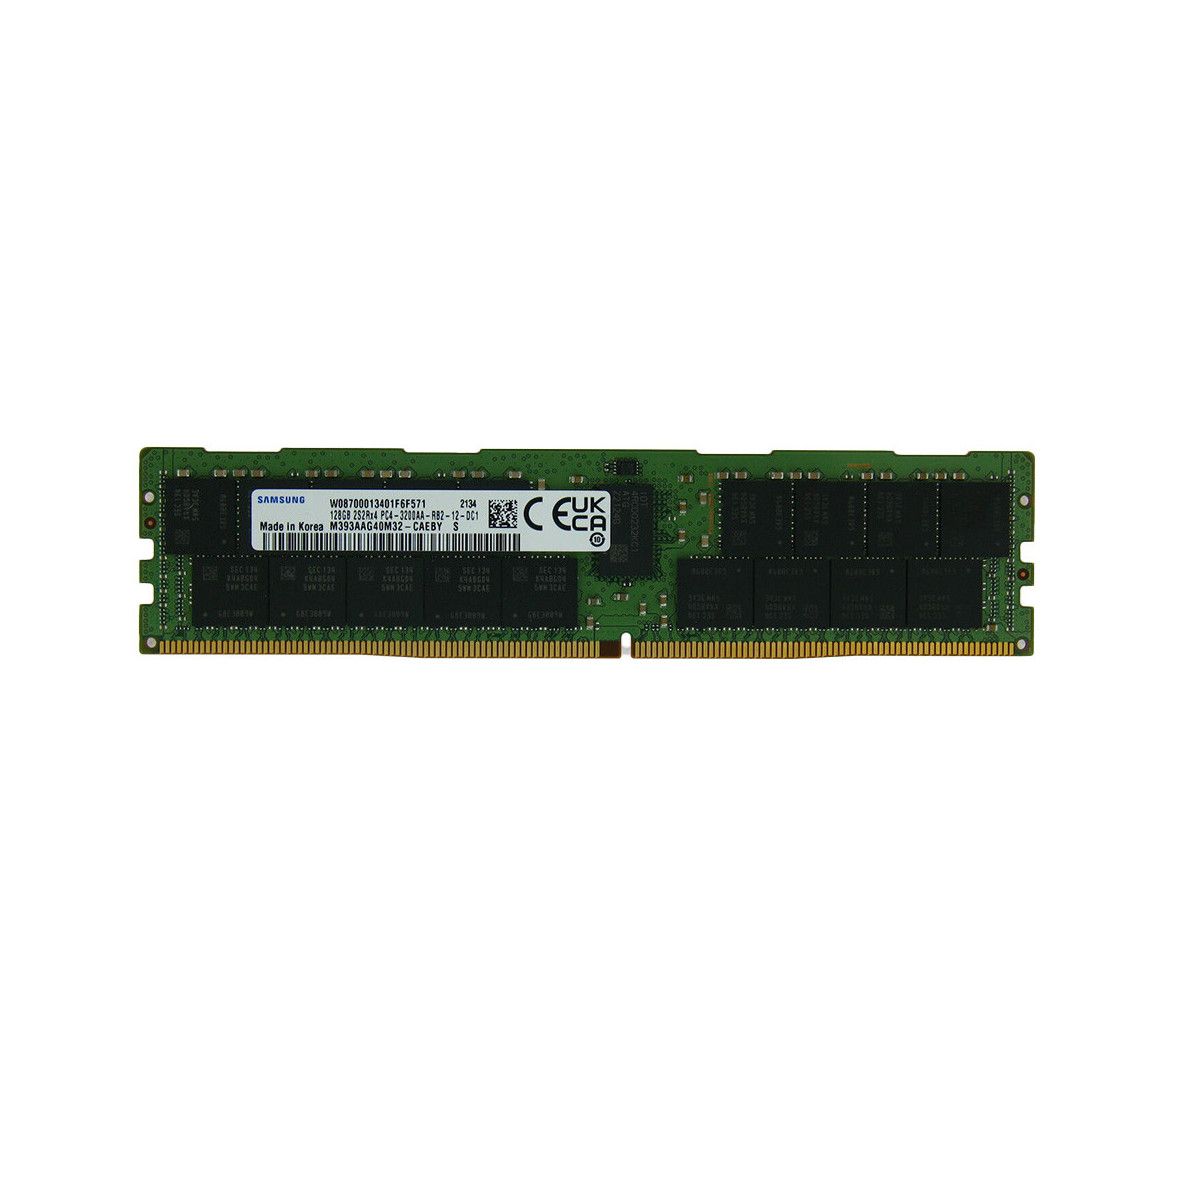 IK HEB GEEN IDEE- Memstar 1x 128GB DDR4-3200 RDIMM PC4-25600R - Mem-Star OEM compatibel geheugen 1 - Memstar 